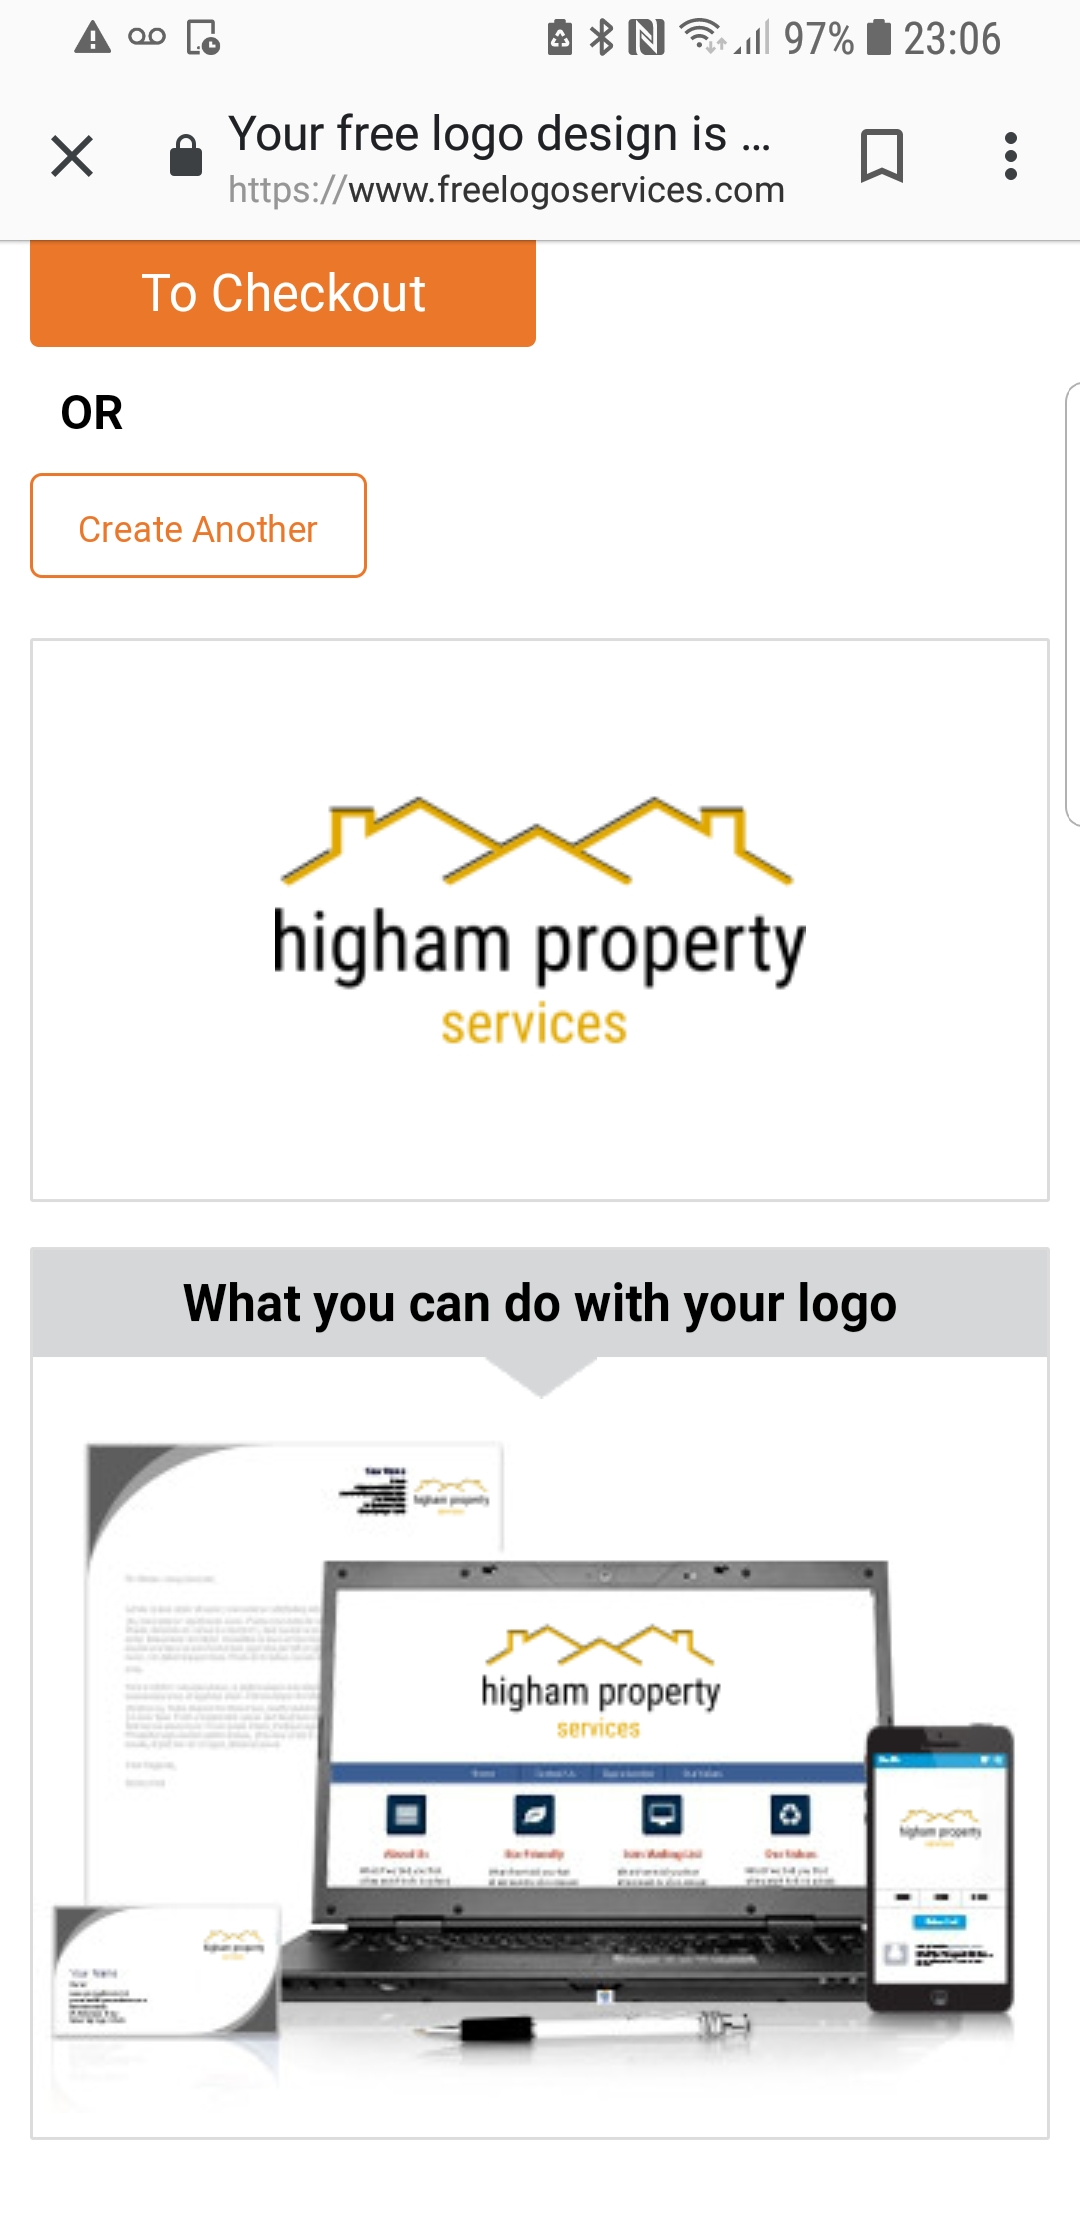 higham property services ltd